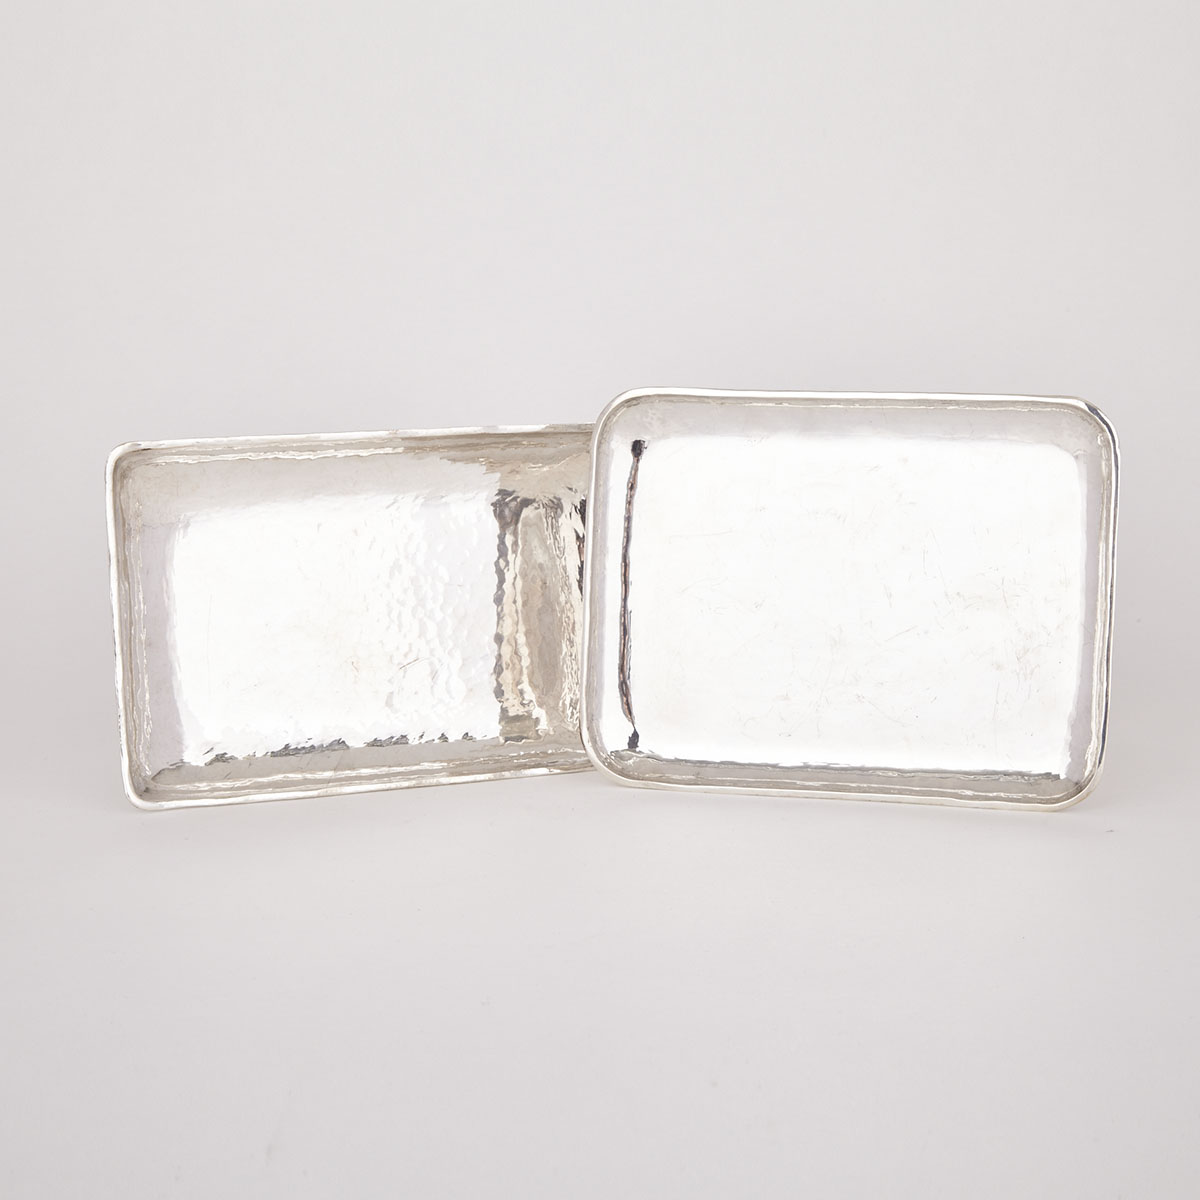 Two Peruvian Silver Rectangular Small Trays, 20th century